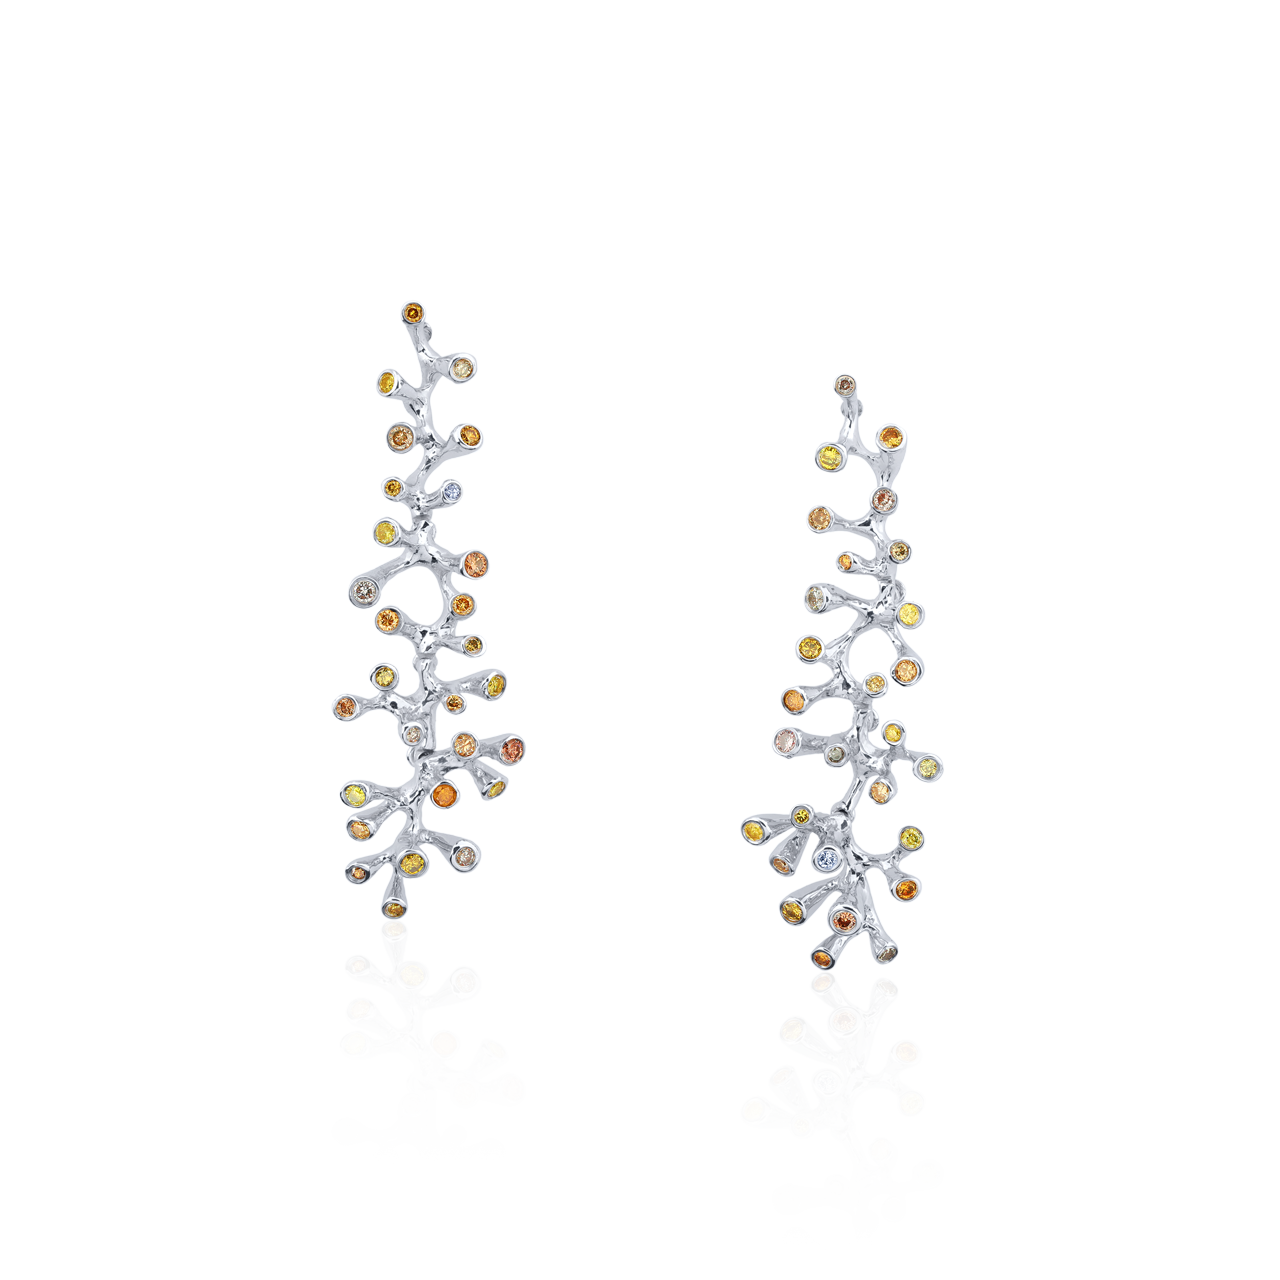 0.68克拉 彩鑽耳環
Colored Diamond Earrings